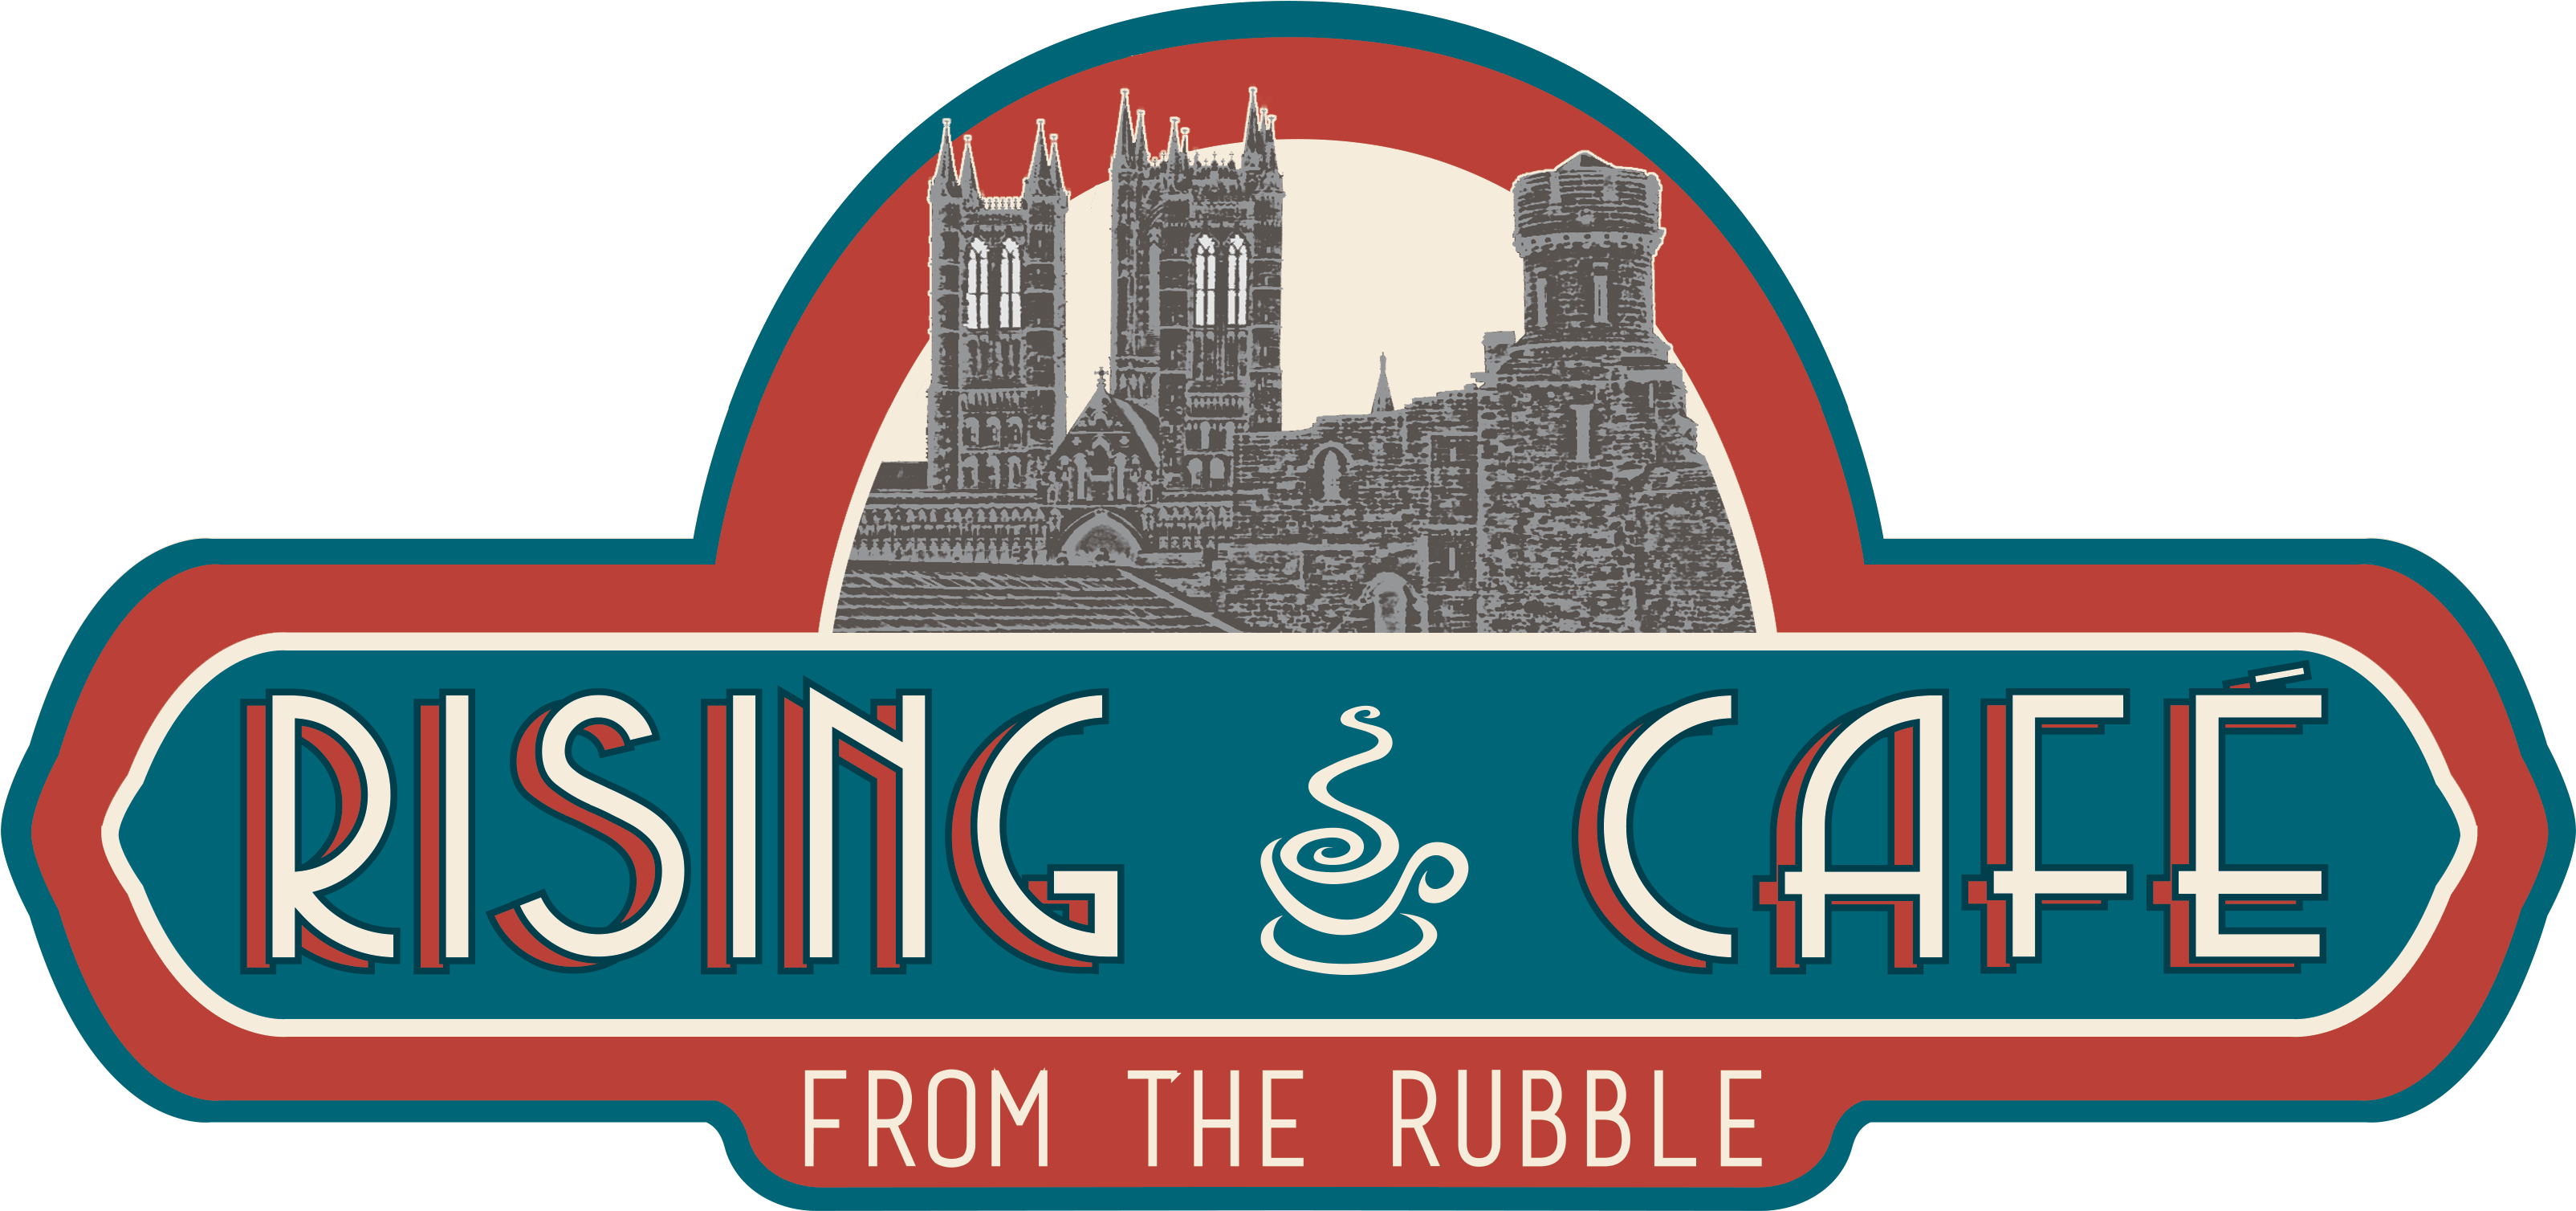 Rising Cafe Logo